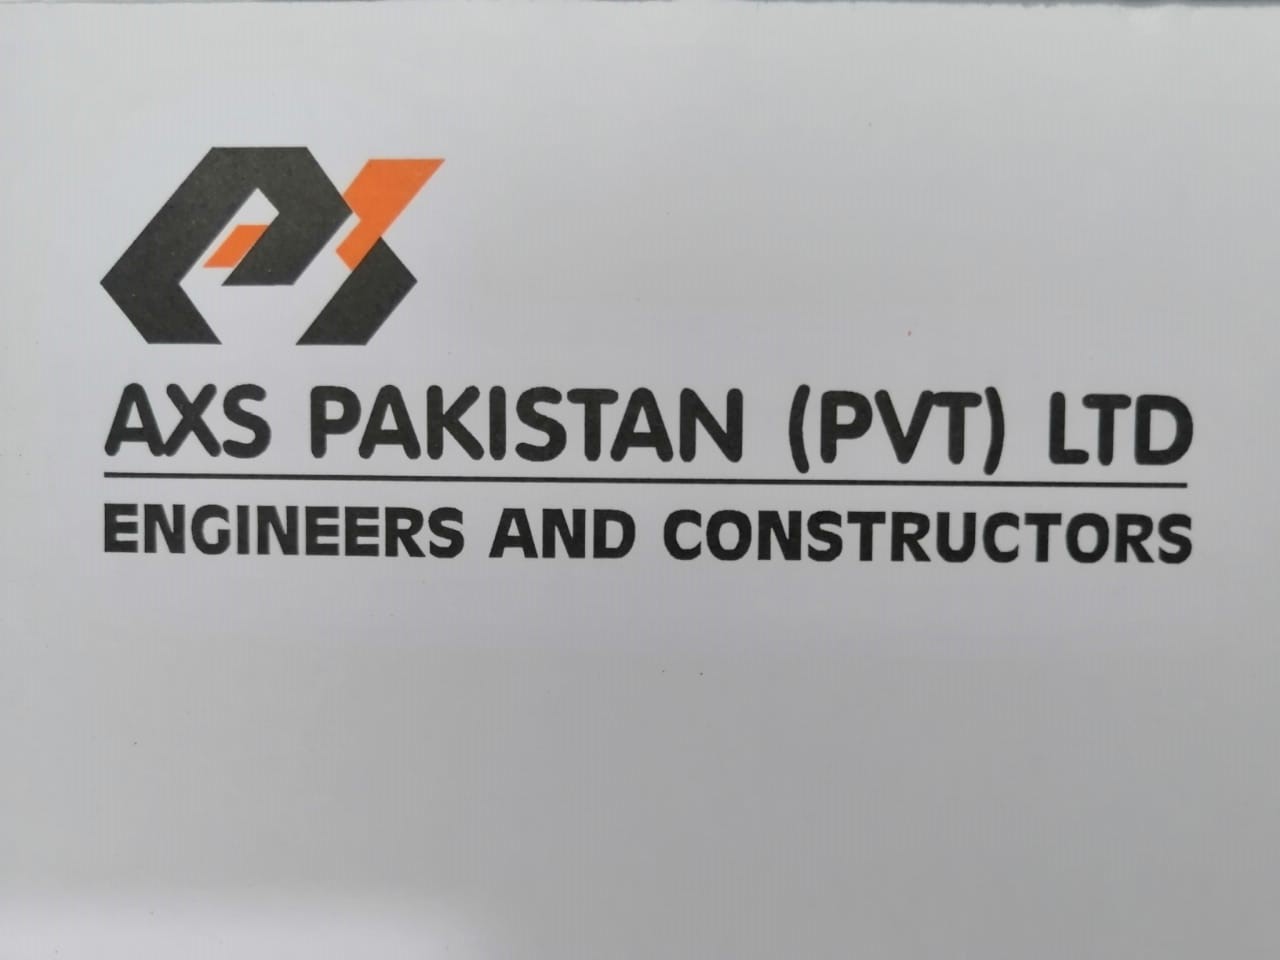 AXS PAKISTAN (PVT) LTD. ENGINEERS AND CONSTRUCTORS